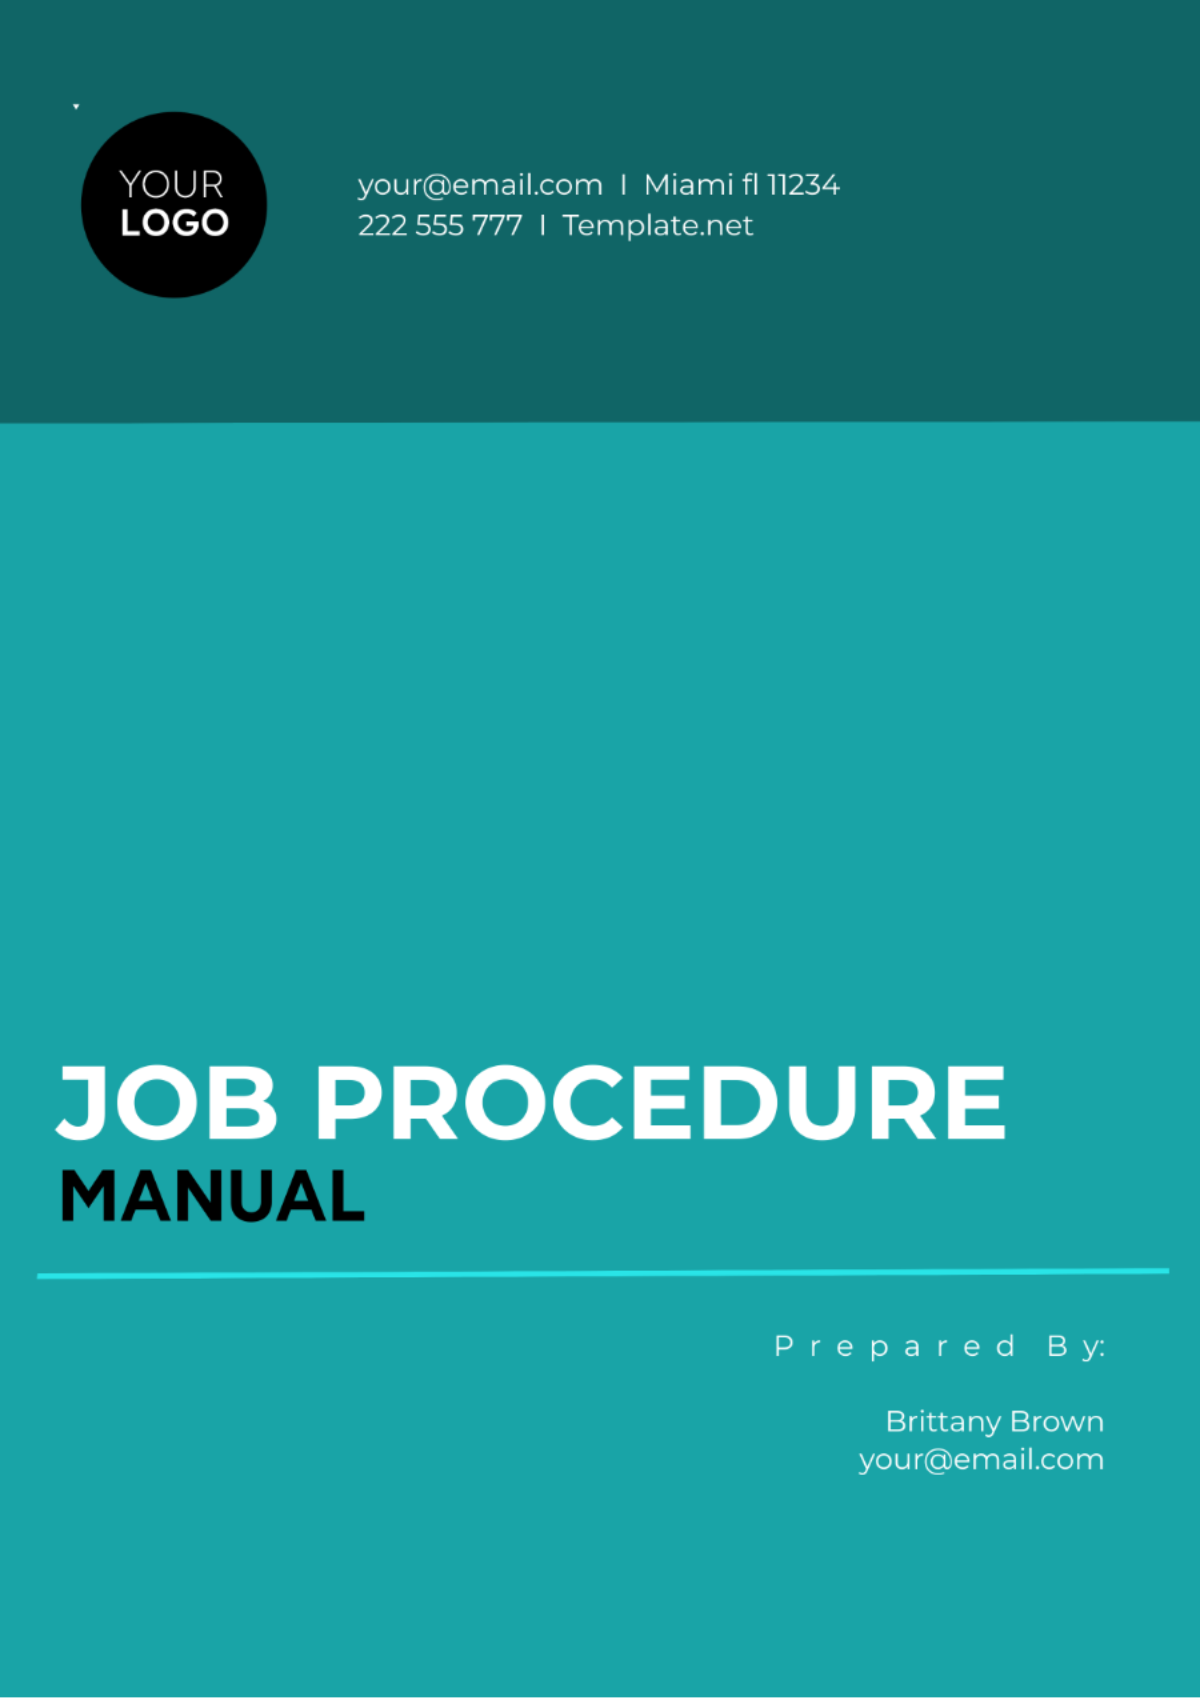 Job Procedure Manual Template